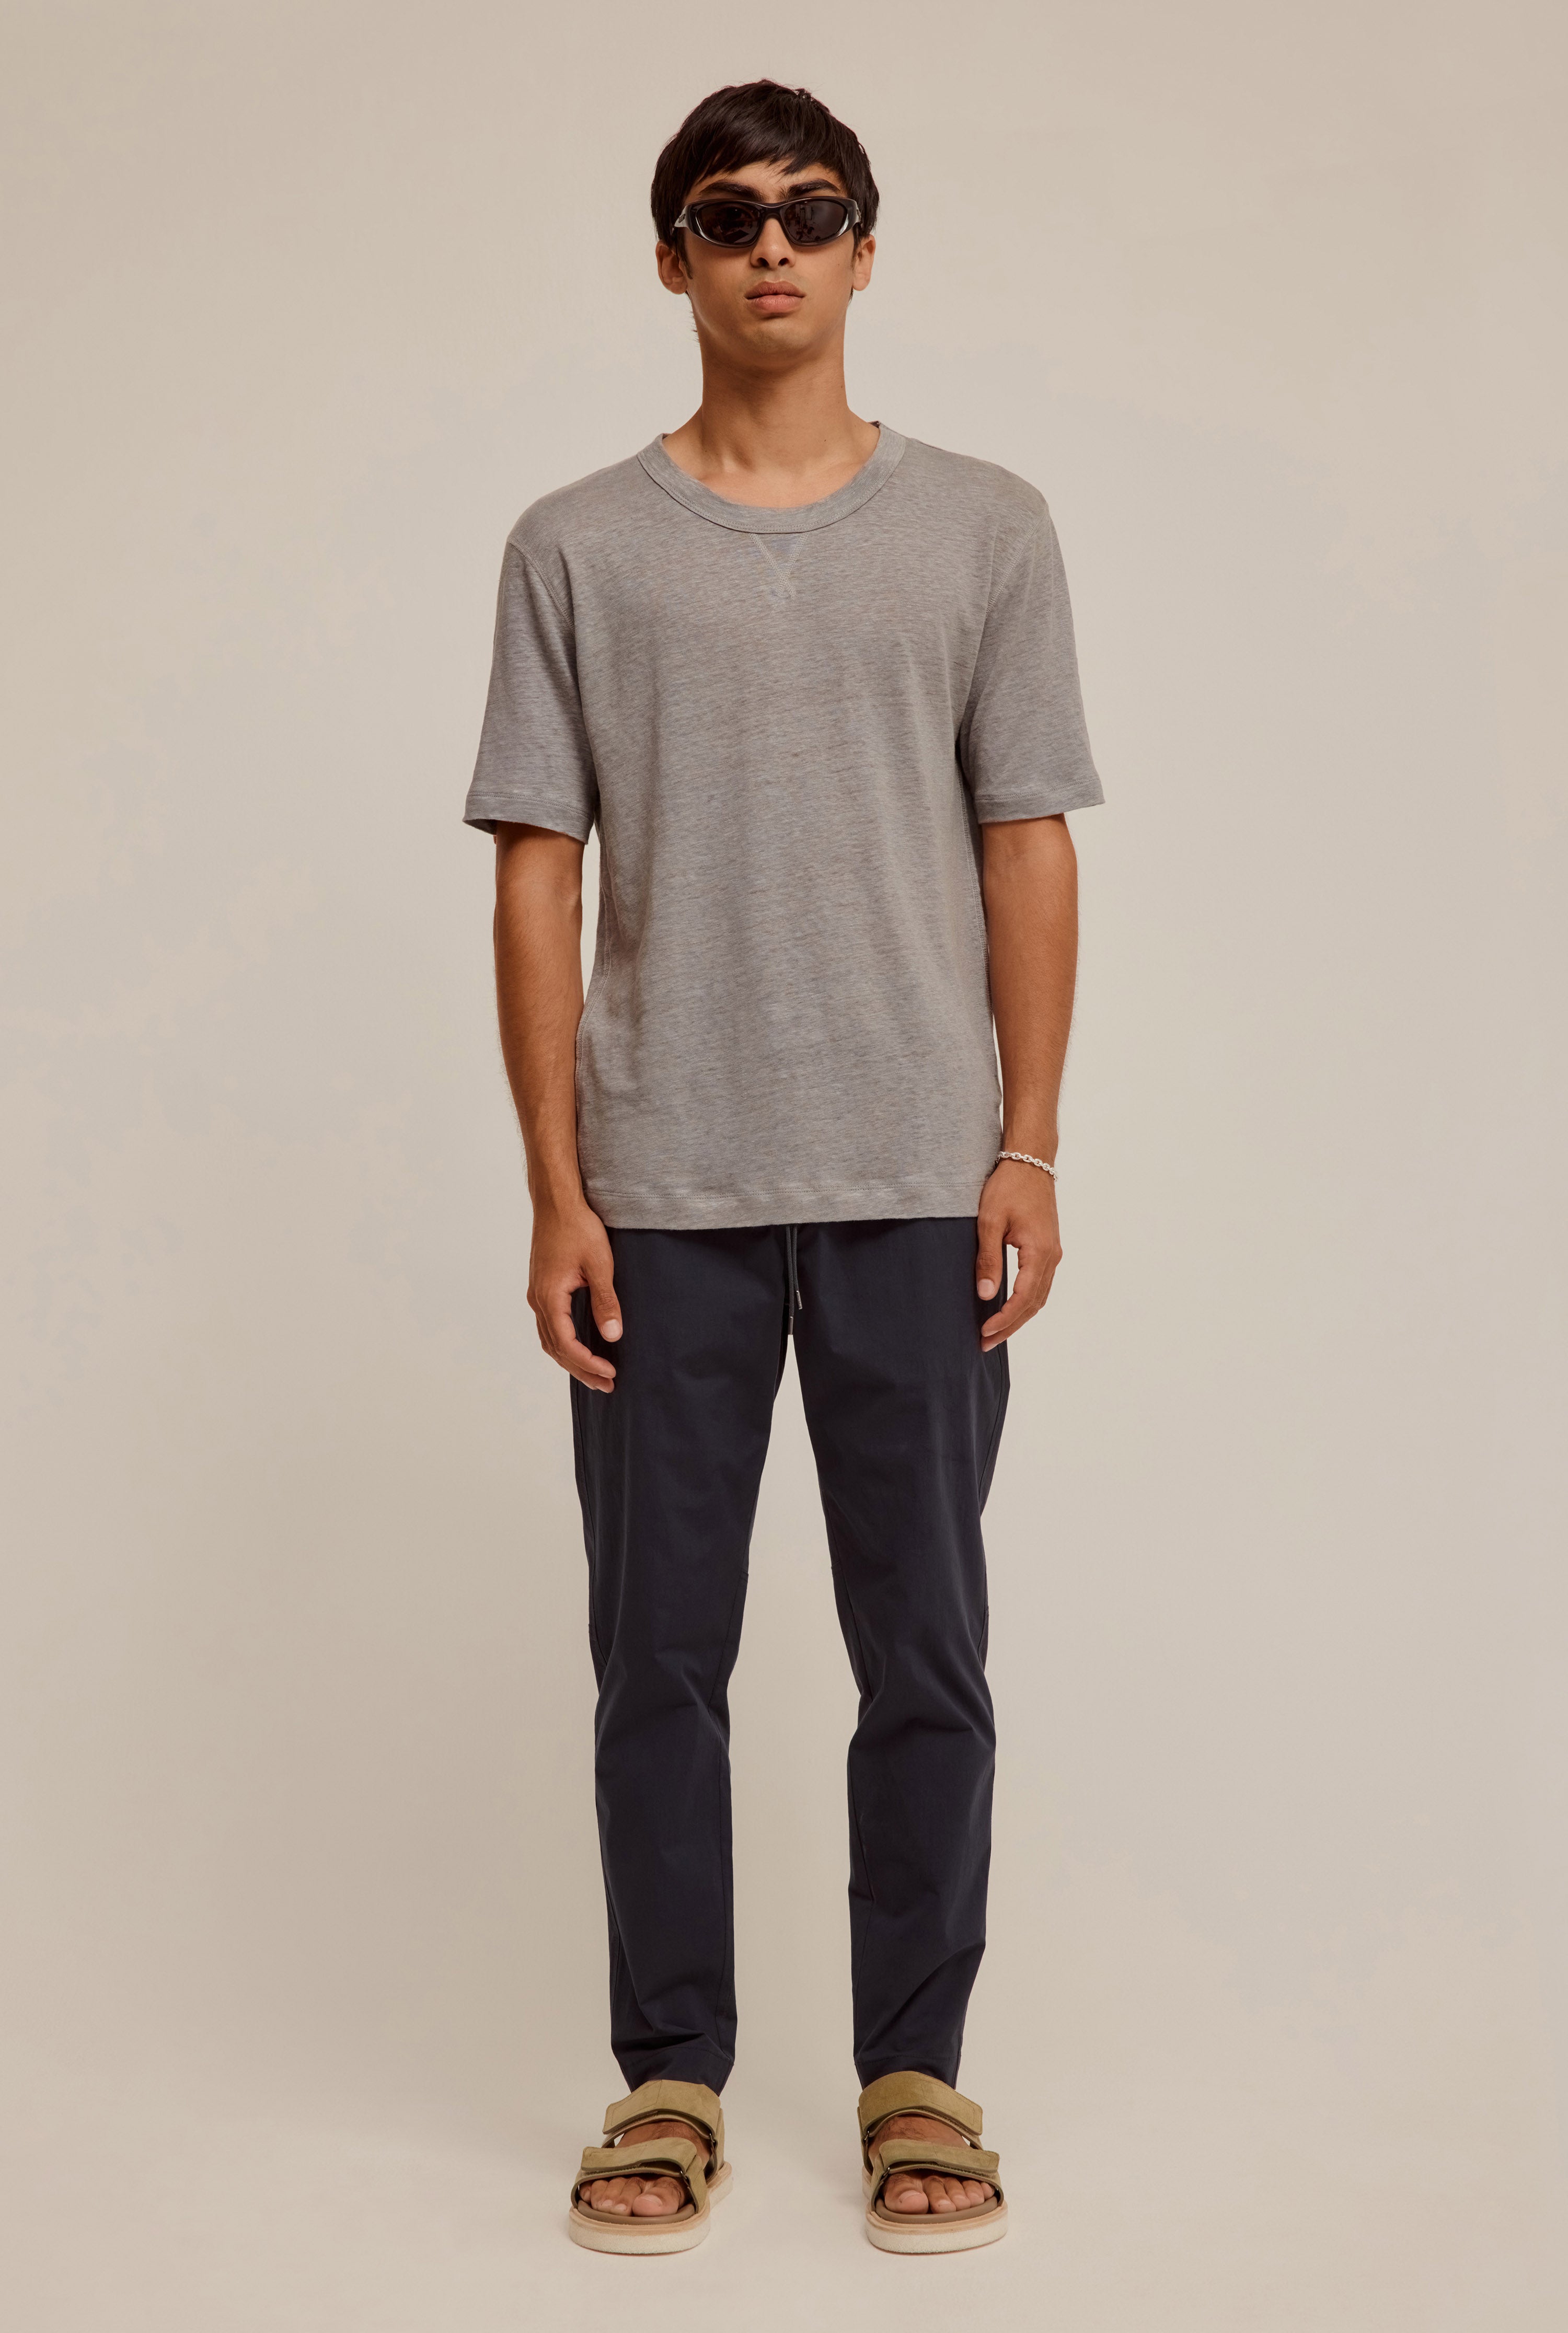 Venroy - Mens Coverstitch Linen T-shirt | Venroy | Premium Leisurewear ...